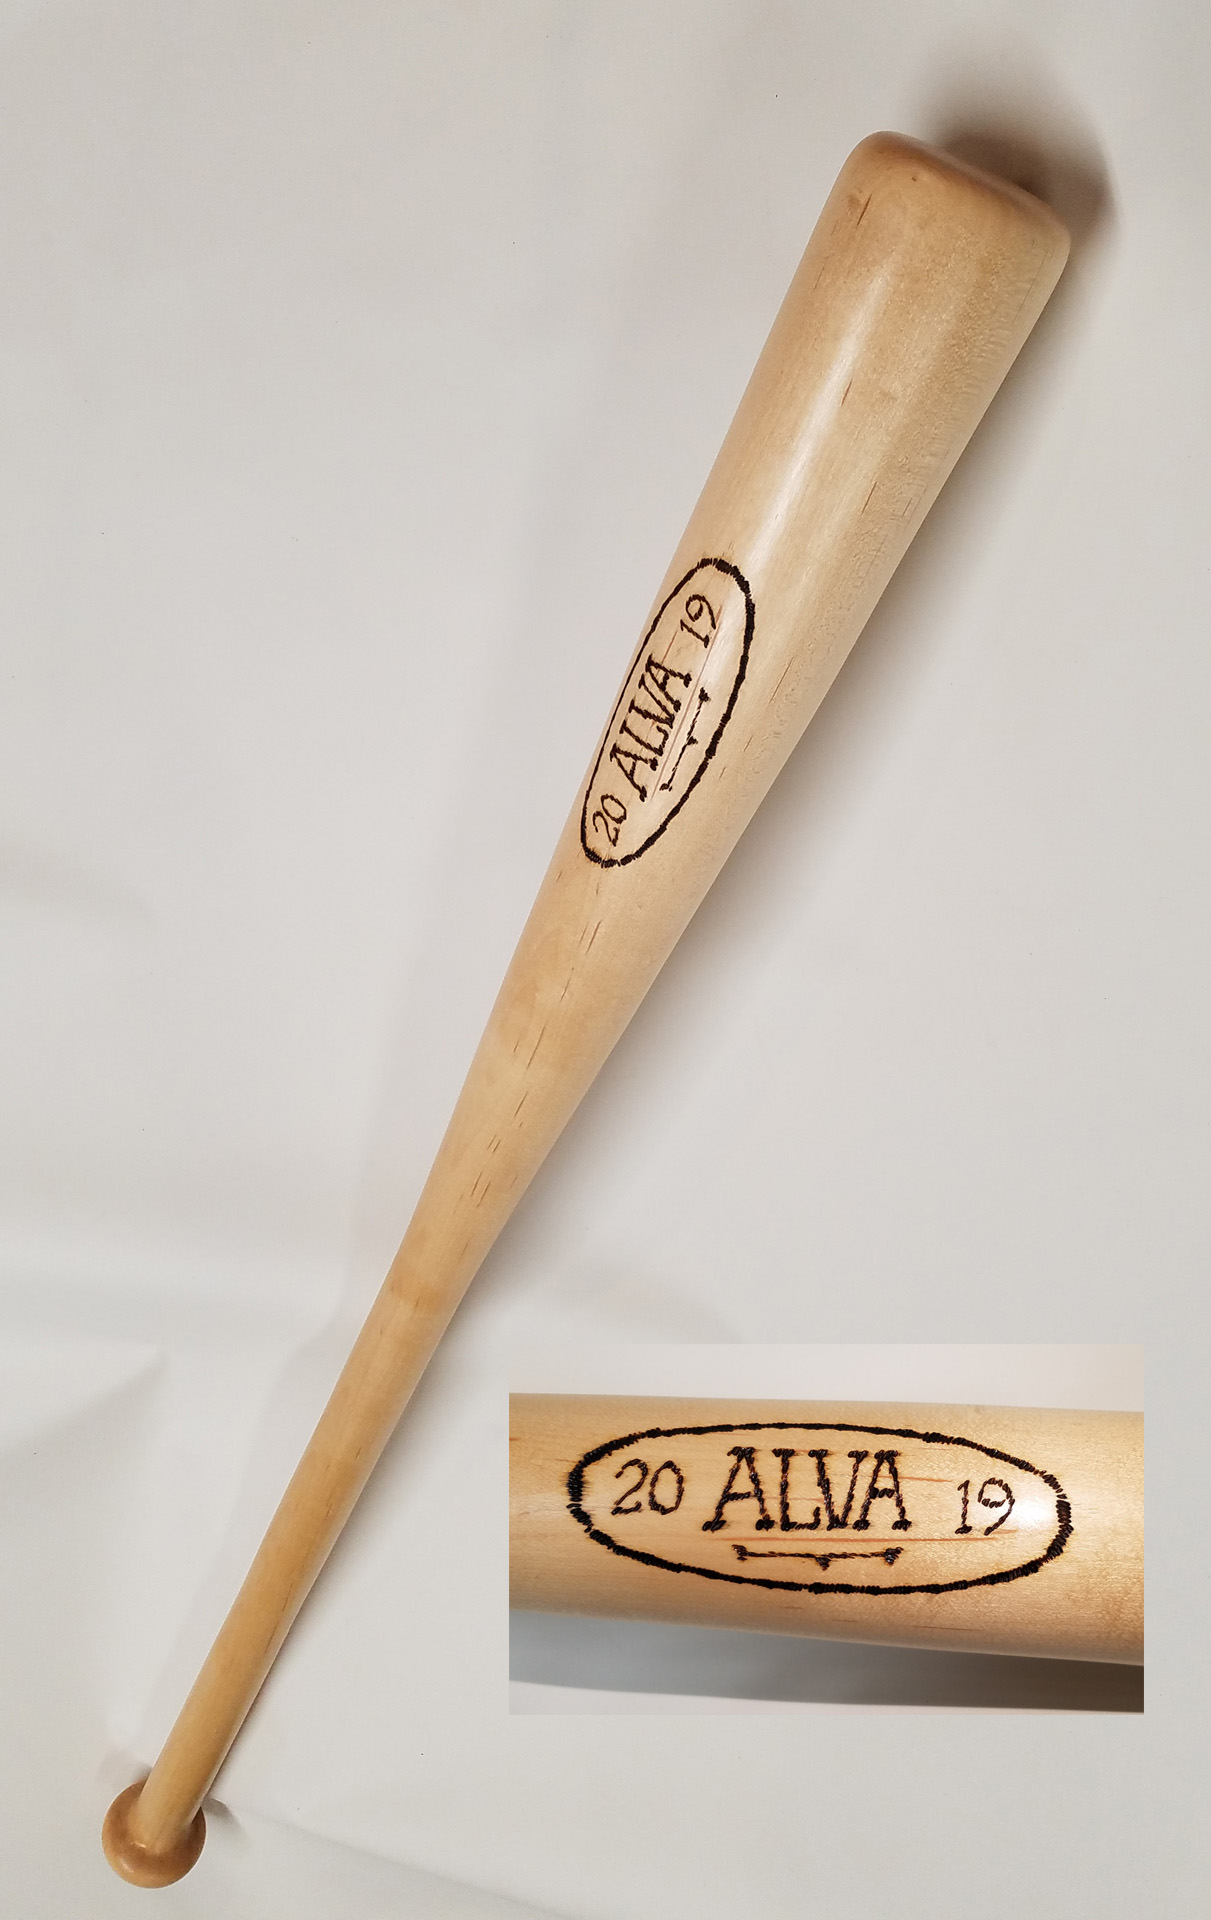 Alva's bat